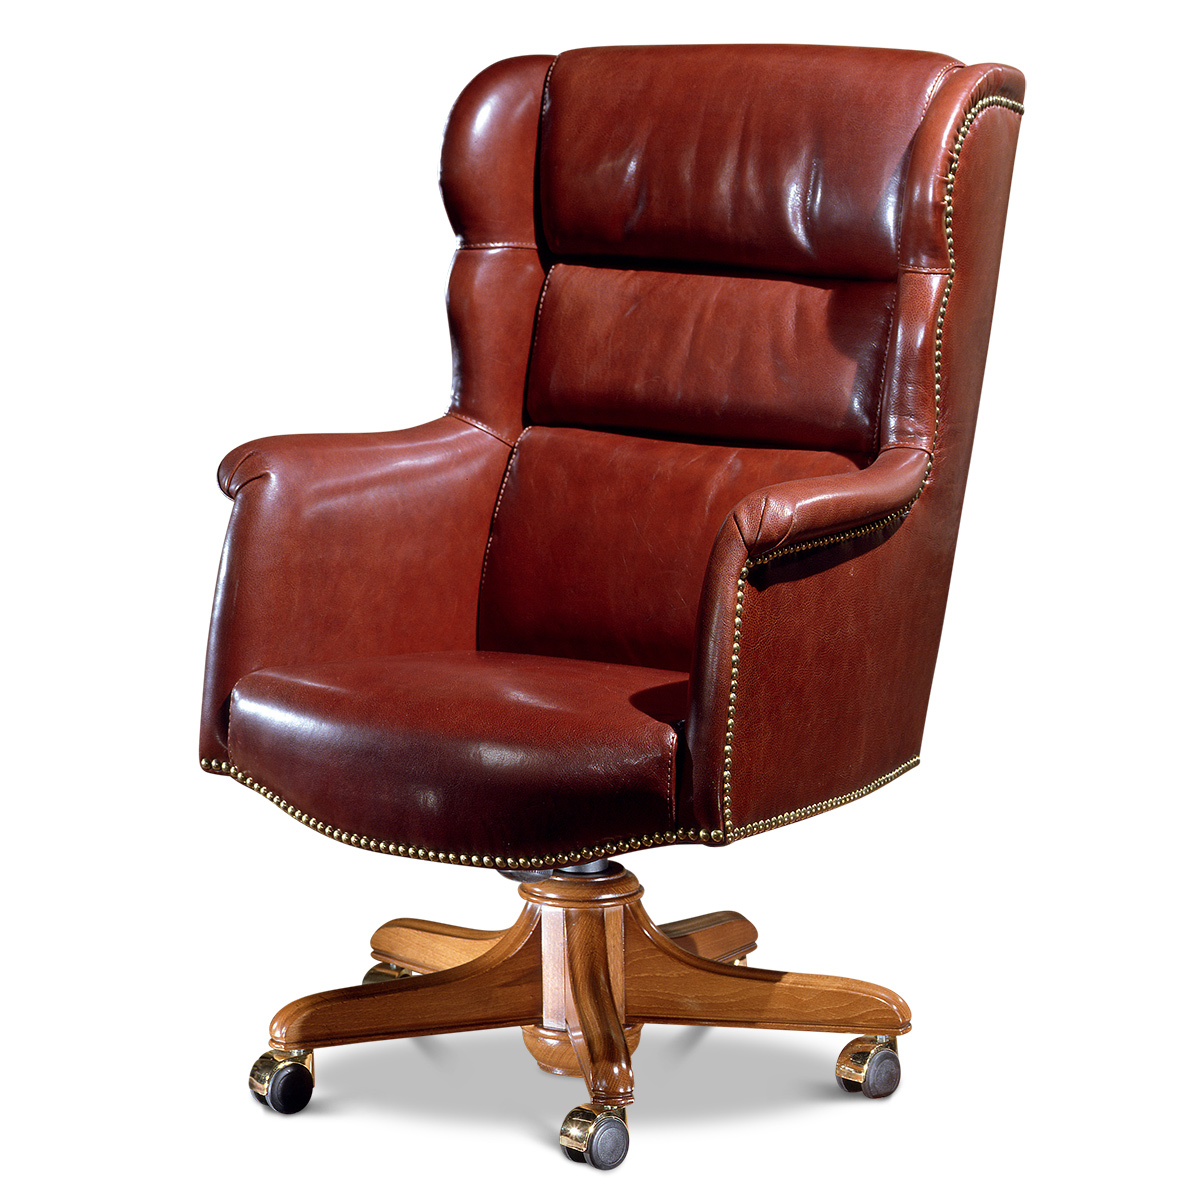 Office armchair “CARTER” made in italy su misura